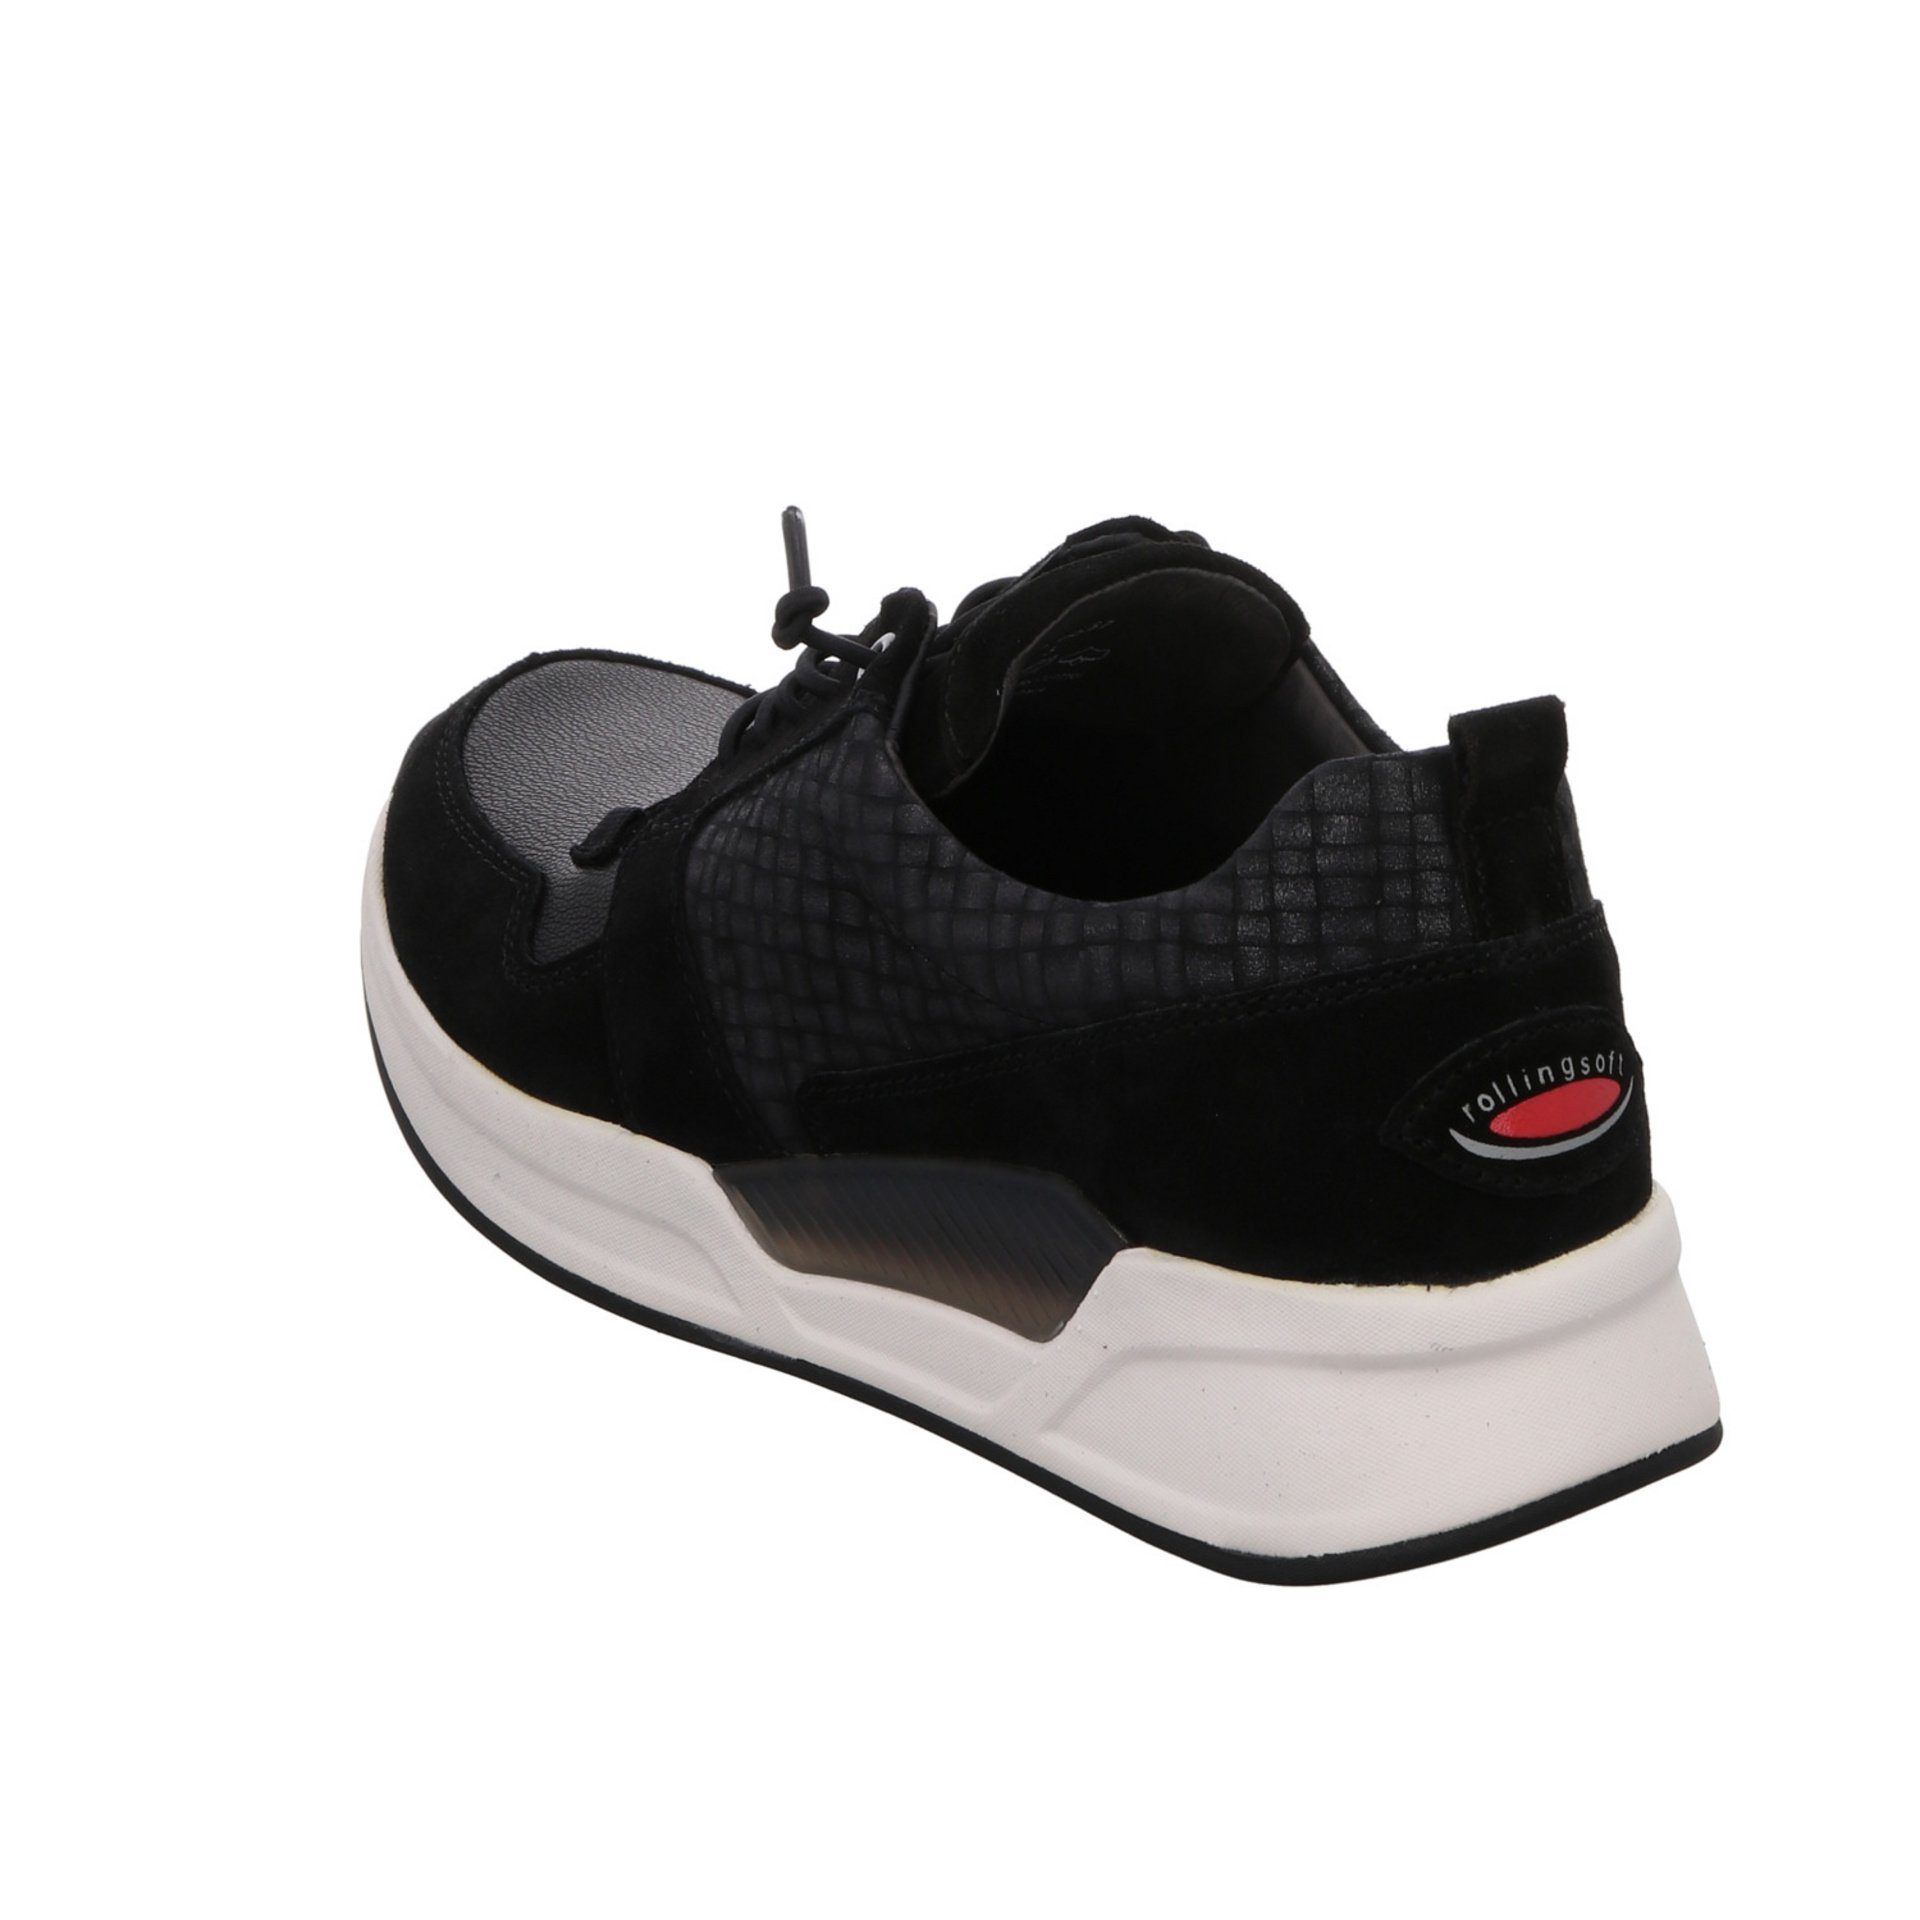 Sneaker schwarz Lederkombination / Gabor Rollingsoft Damen Schuhe 87 Sneaker Schnürschuh